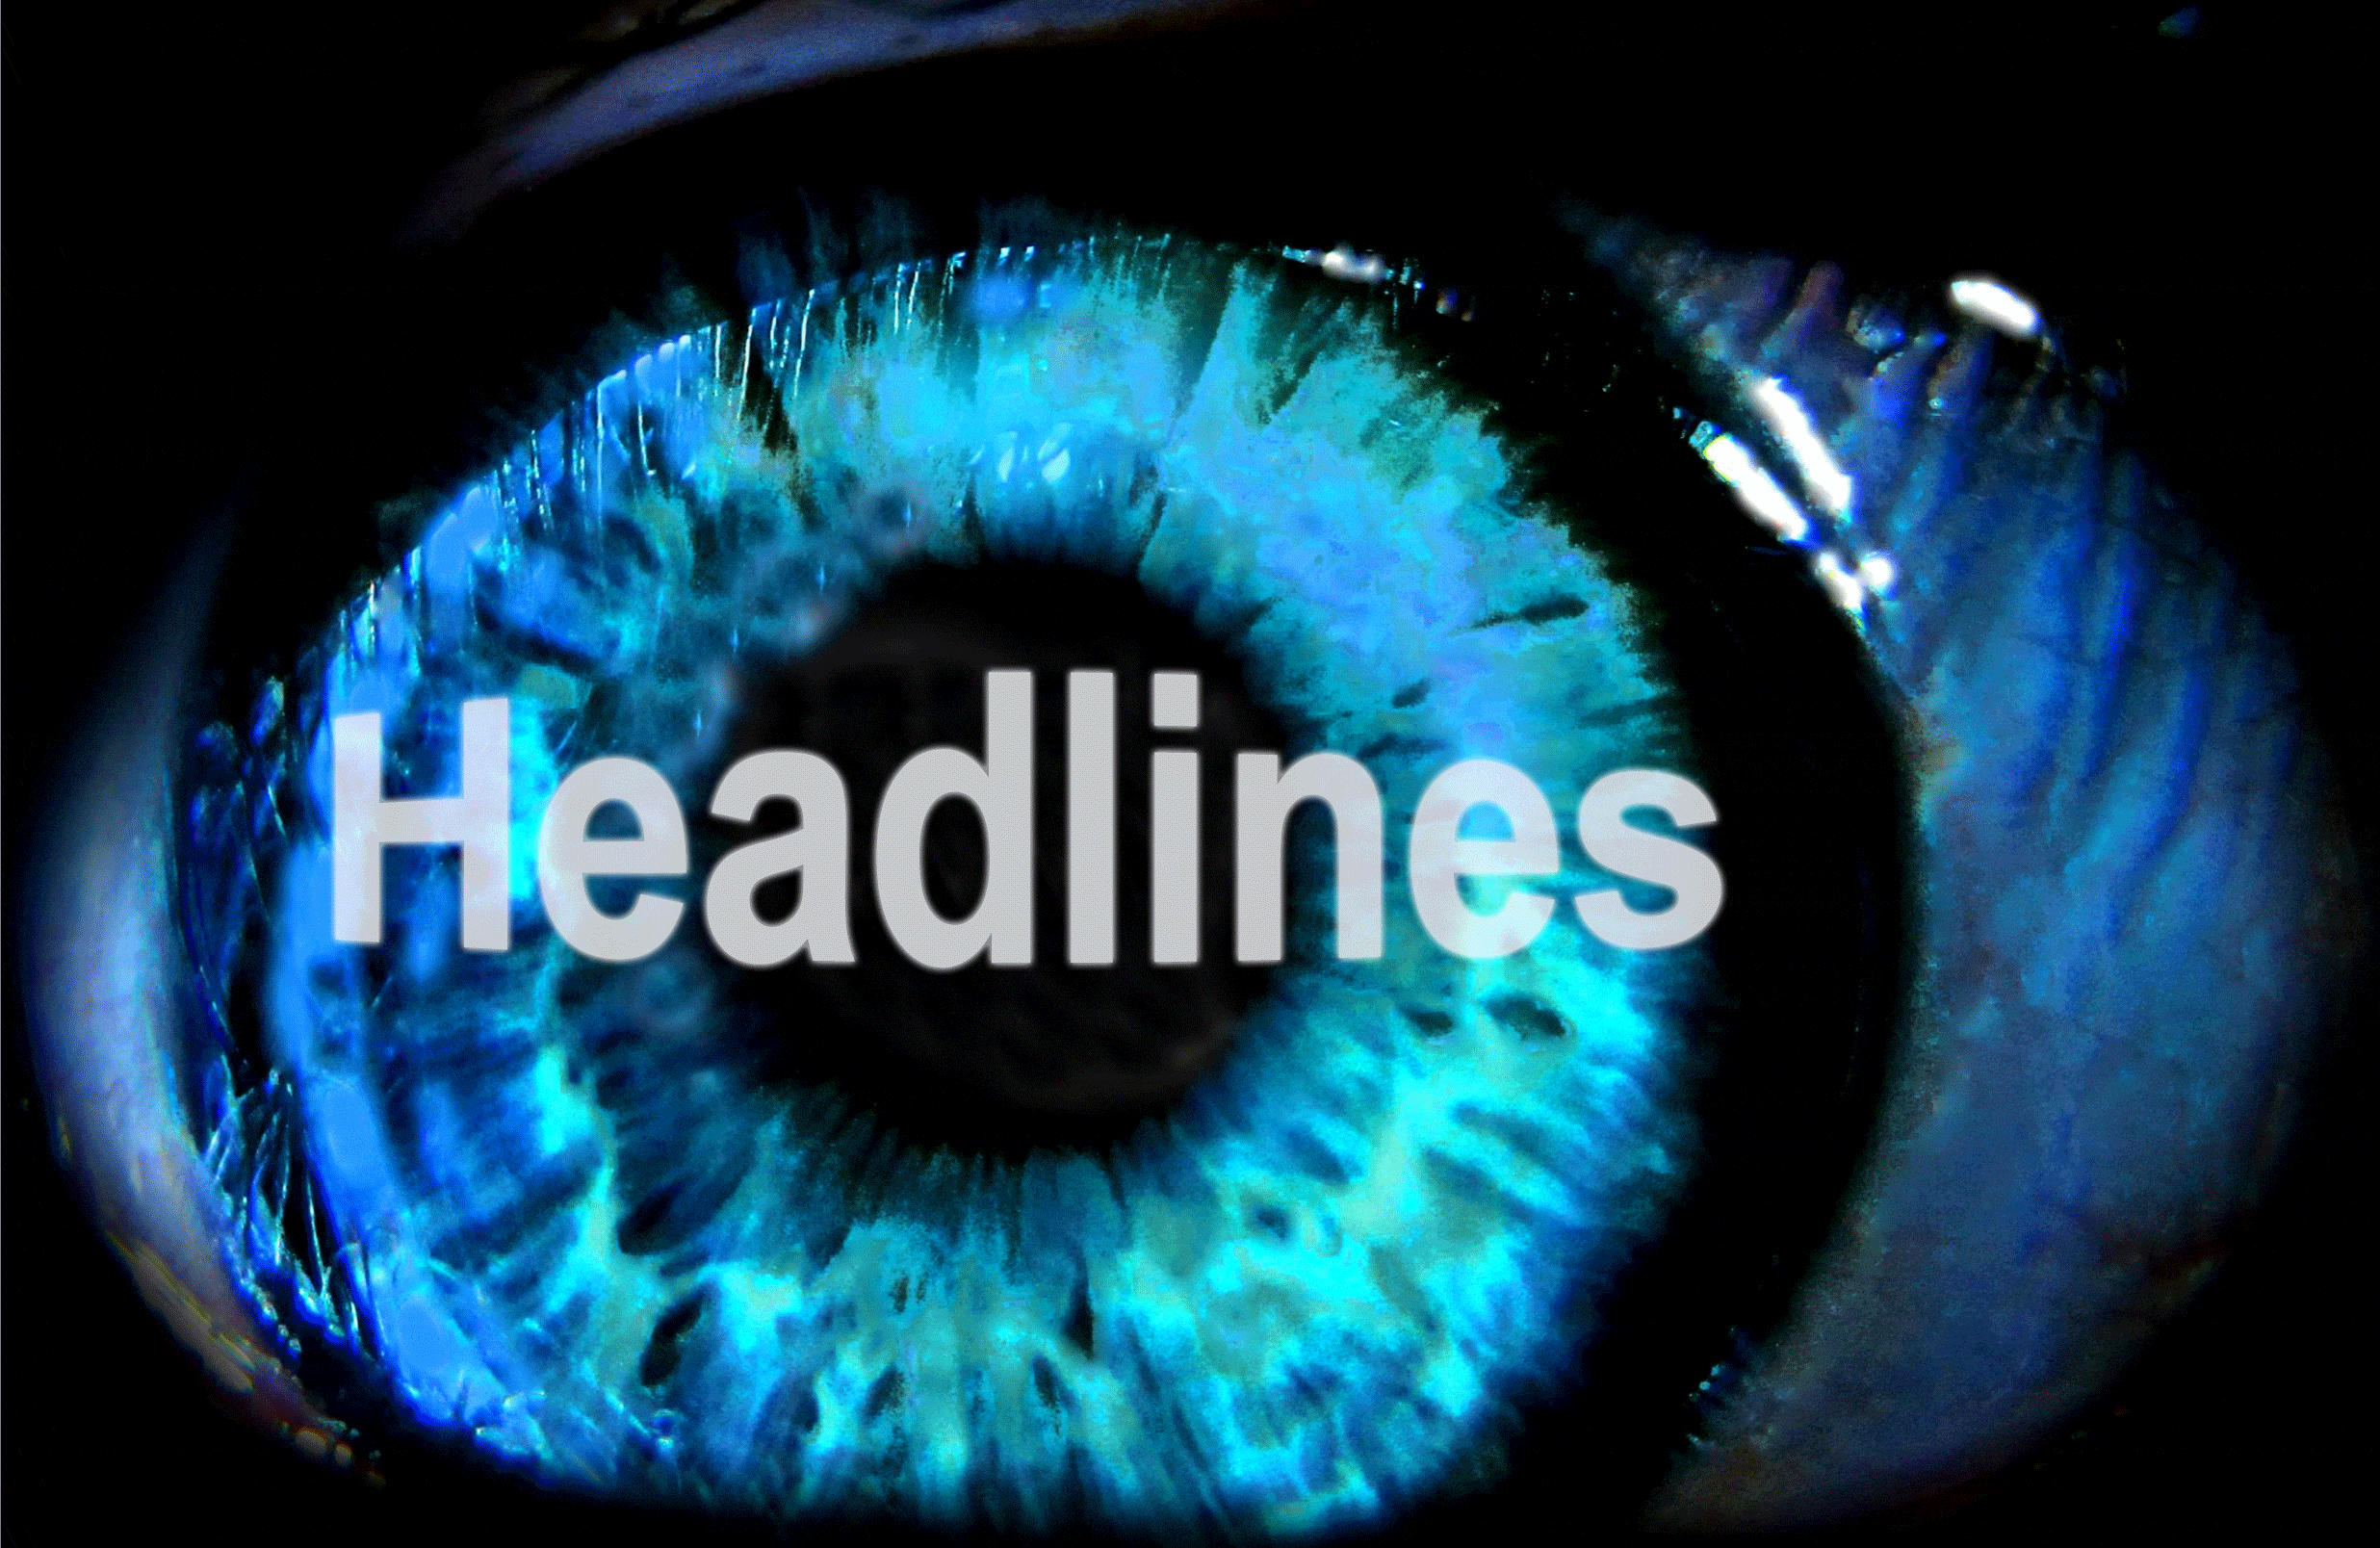 the word headlines in a human eye